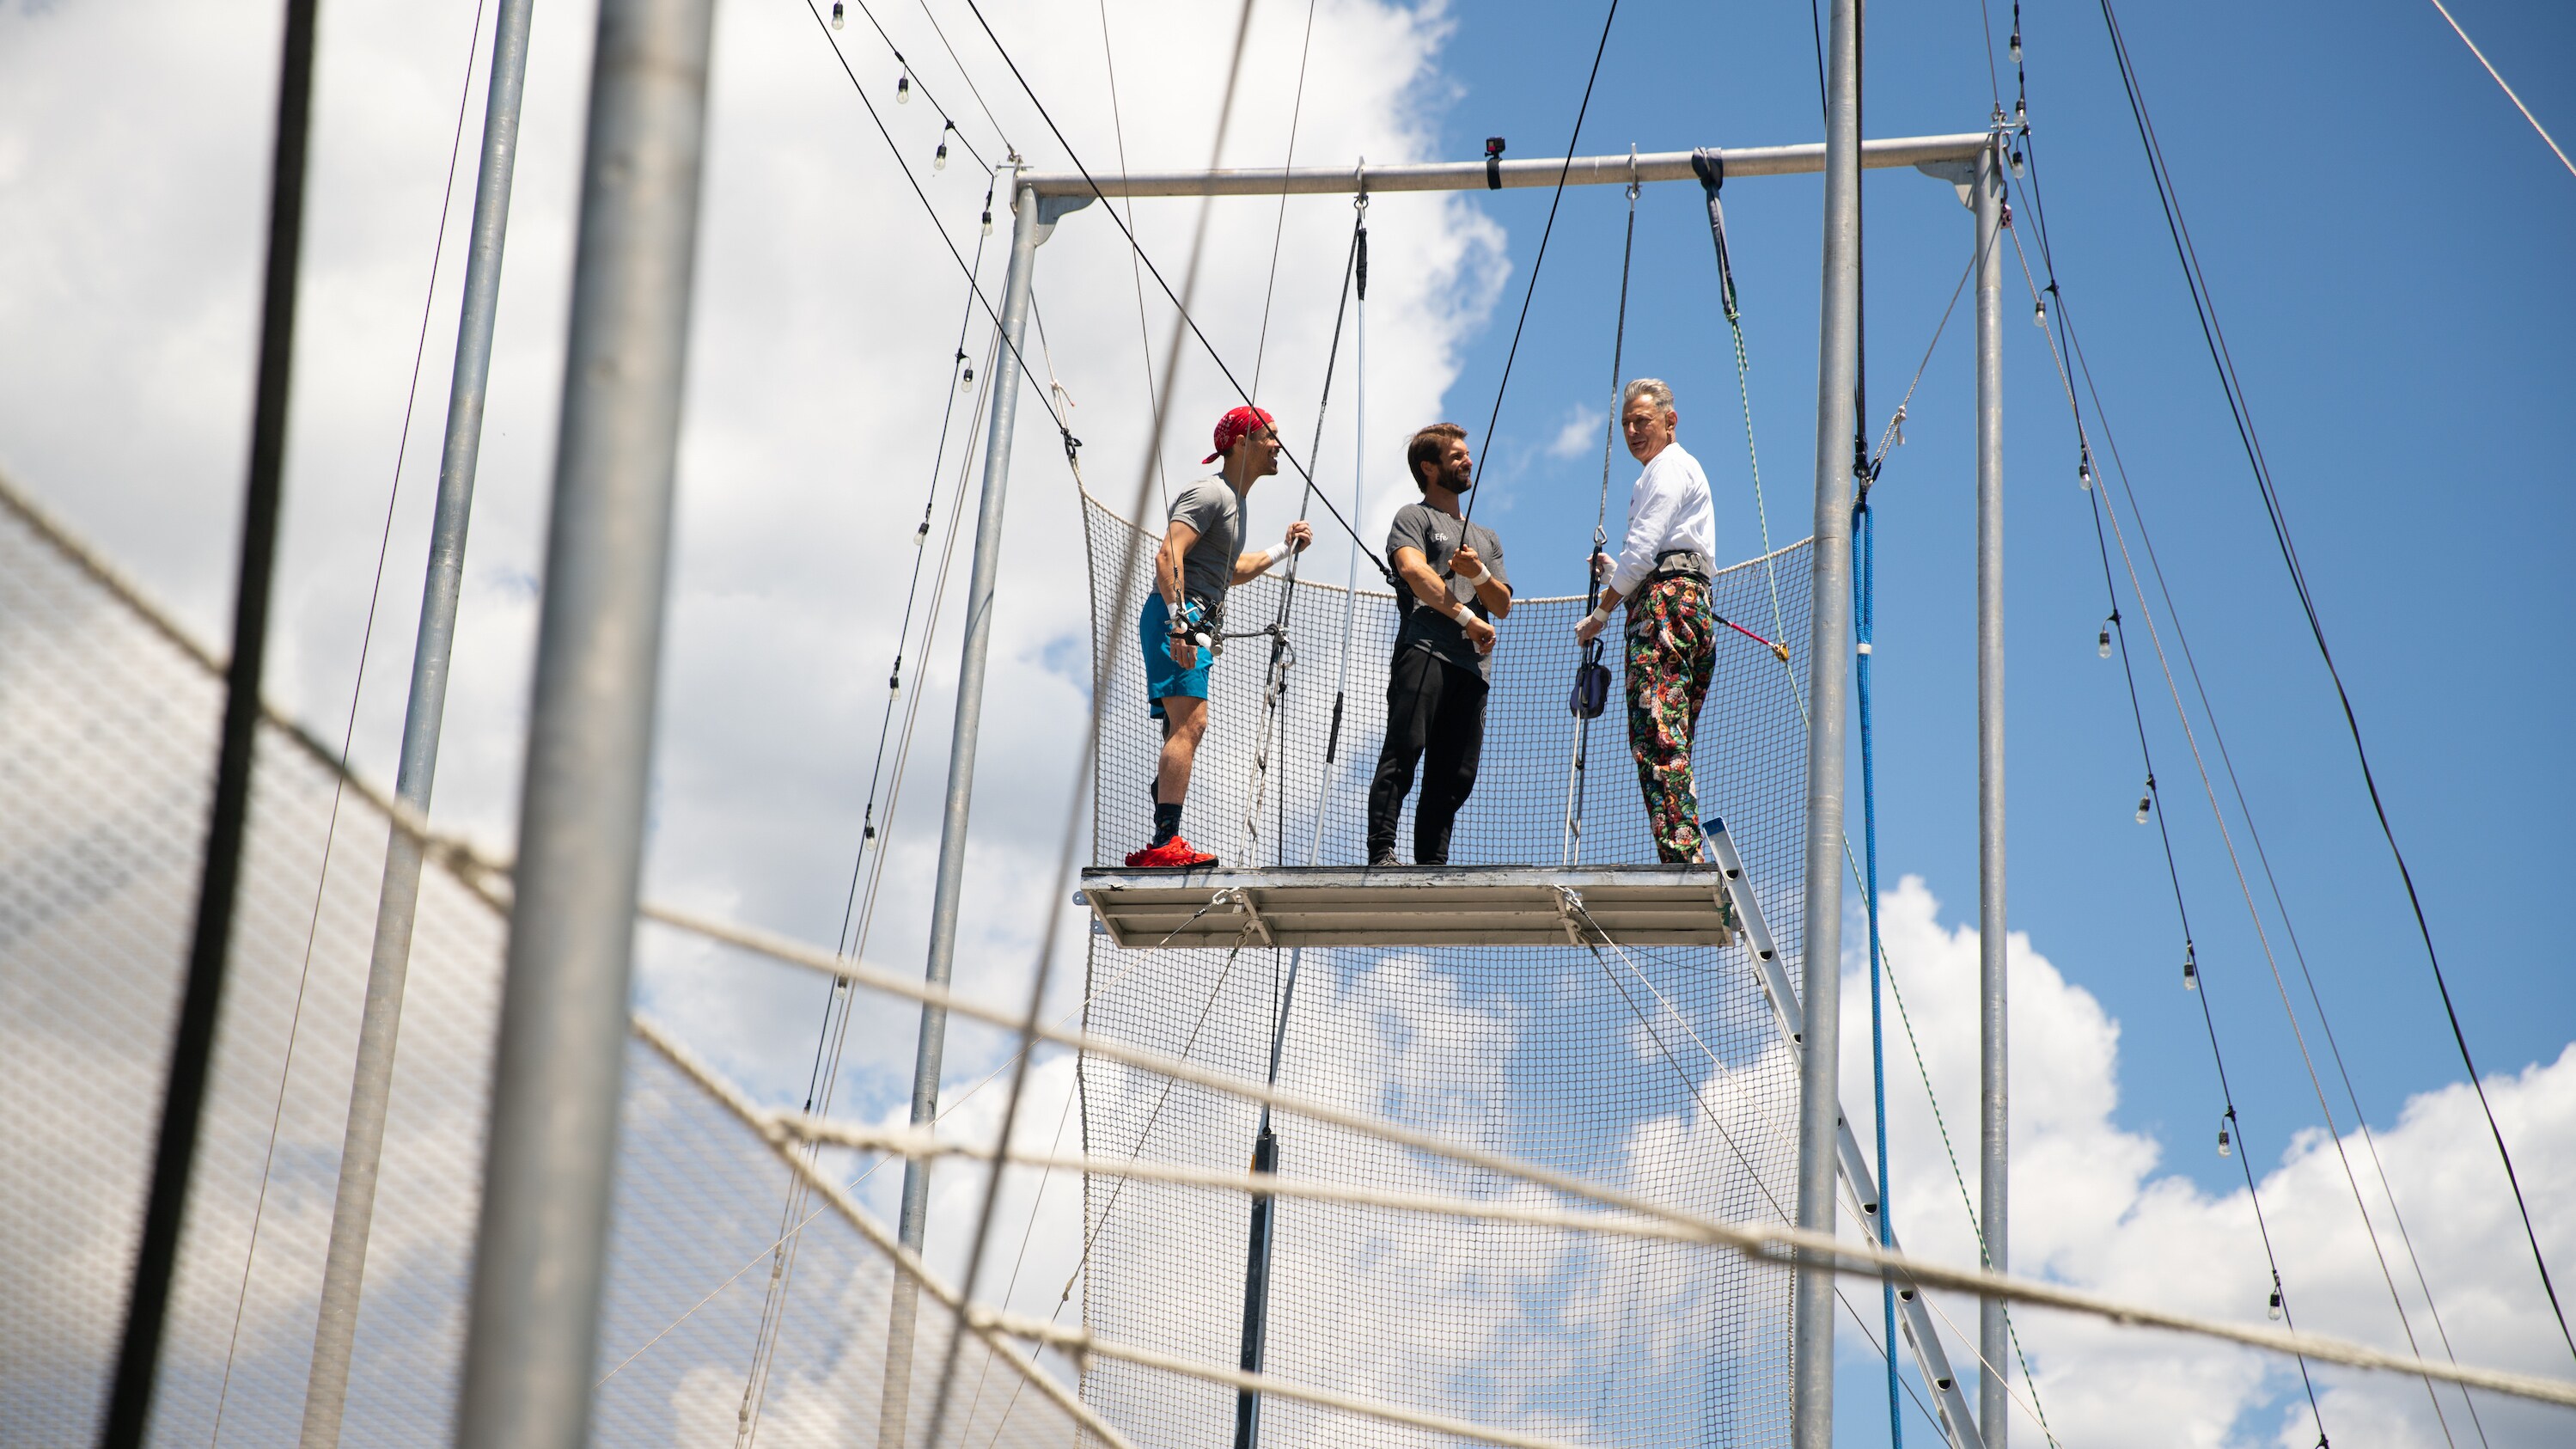 Santa Barbara, CA - Jeff Goldblum (R) prepares to try the trapeze. (Credit: National Geographic)